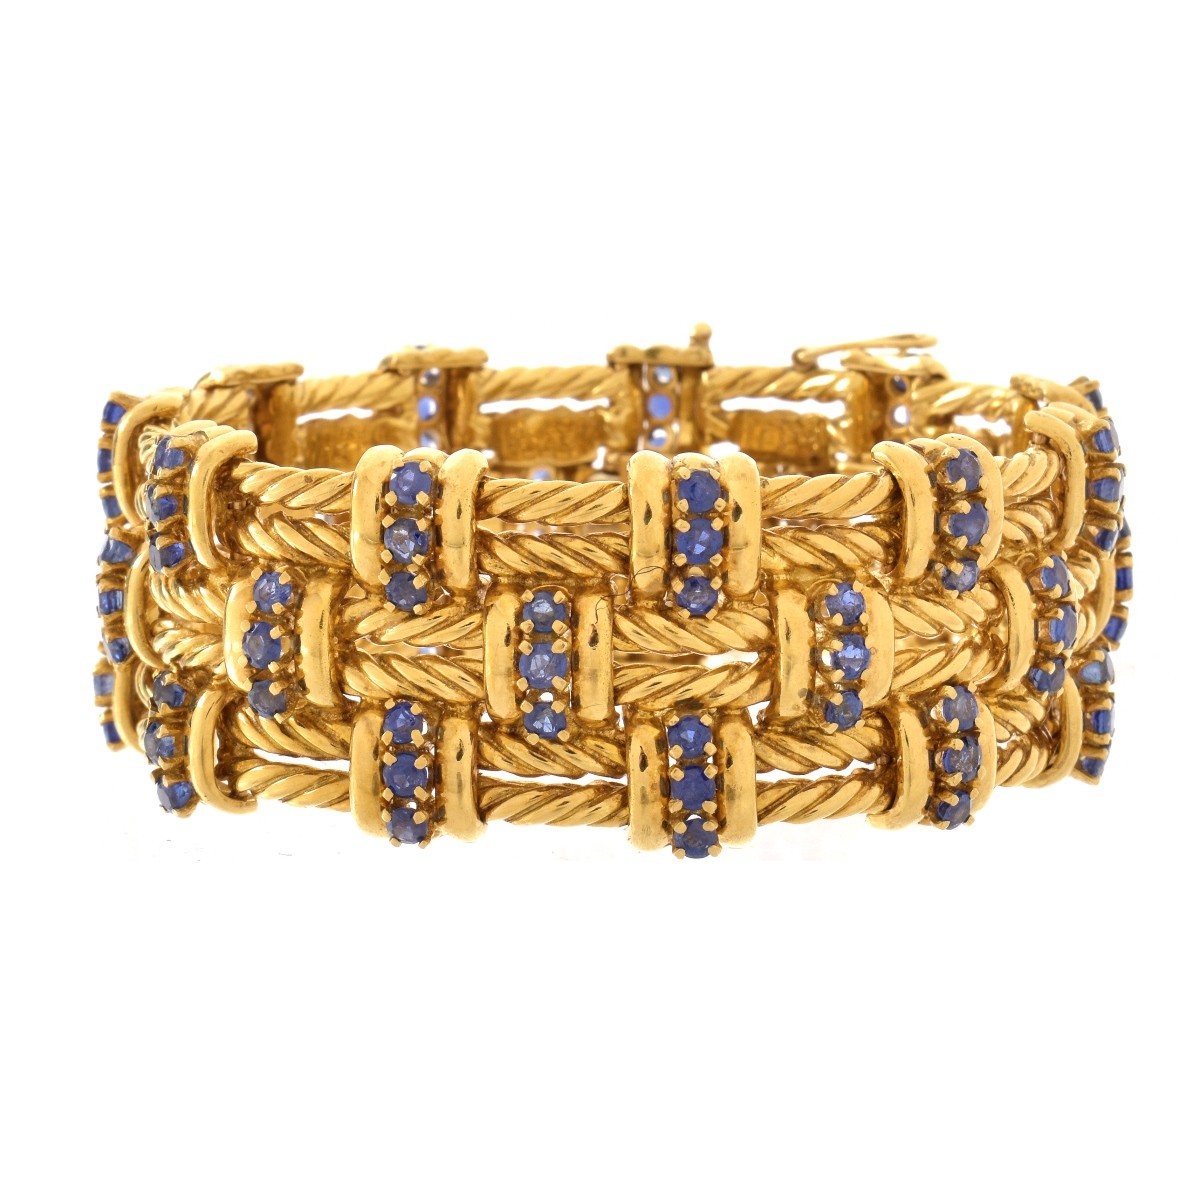 Tiffany & Co 18K and Sapphire Bracelet